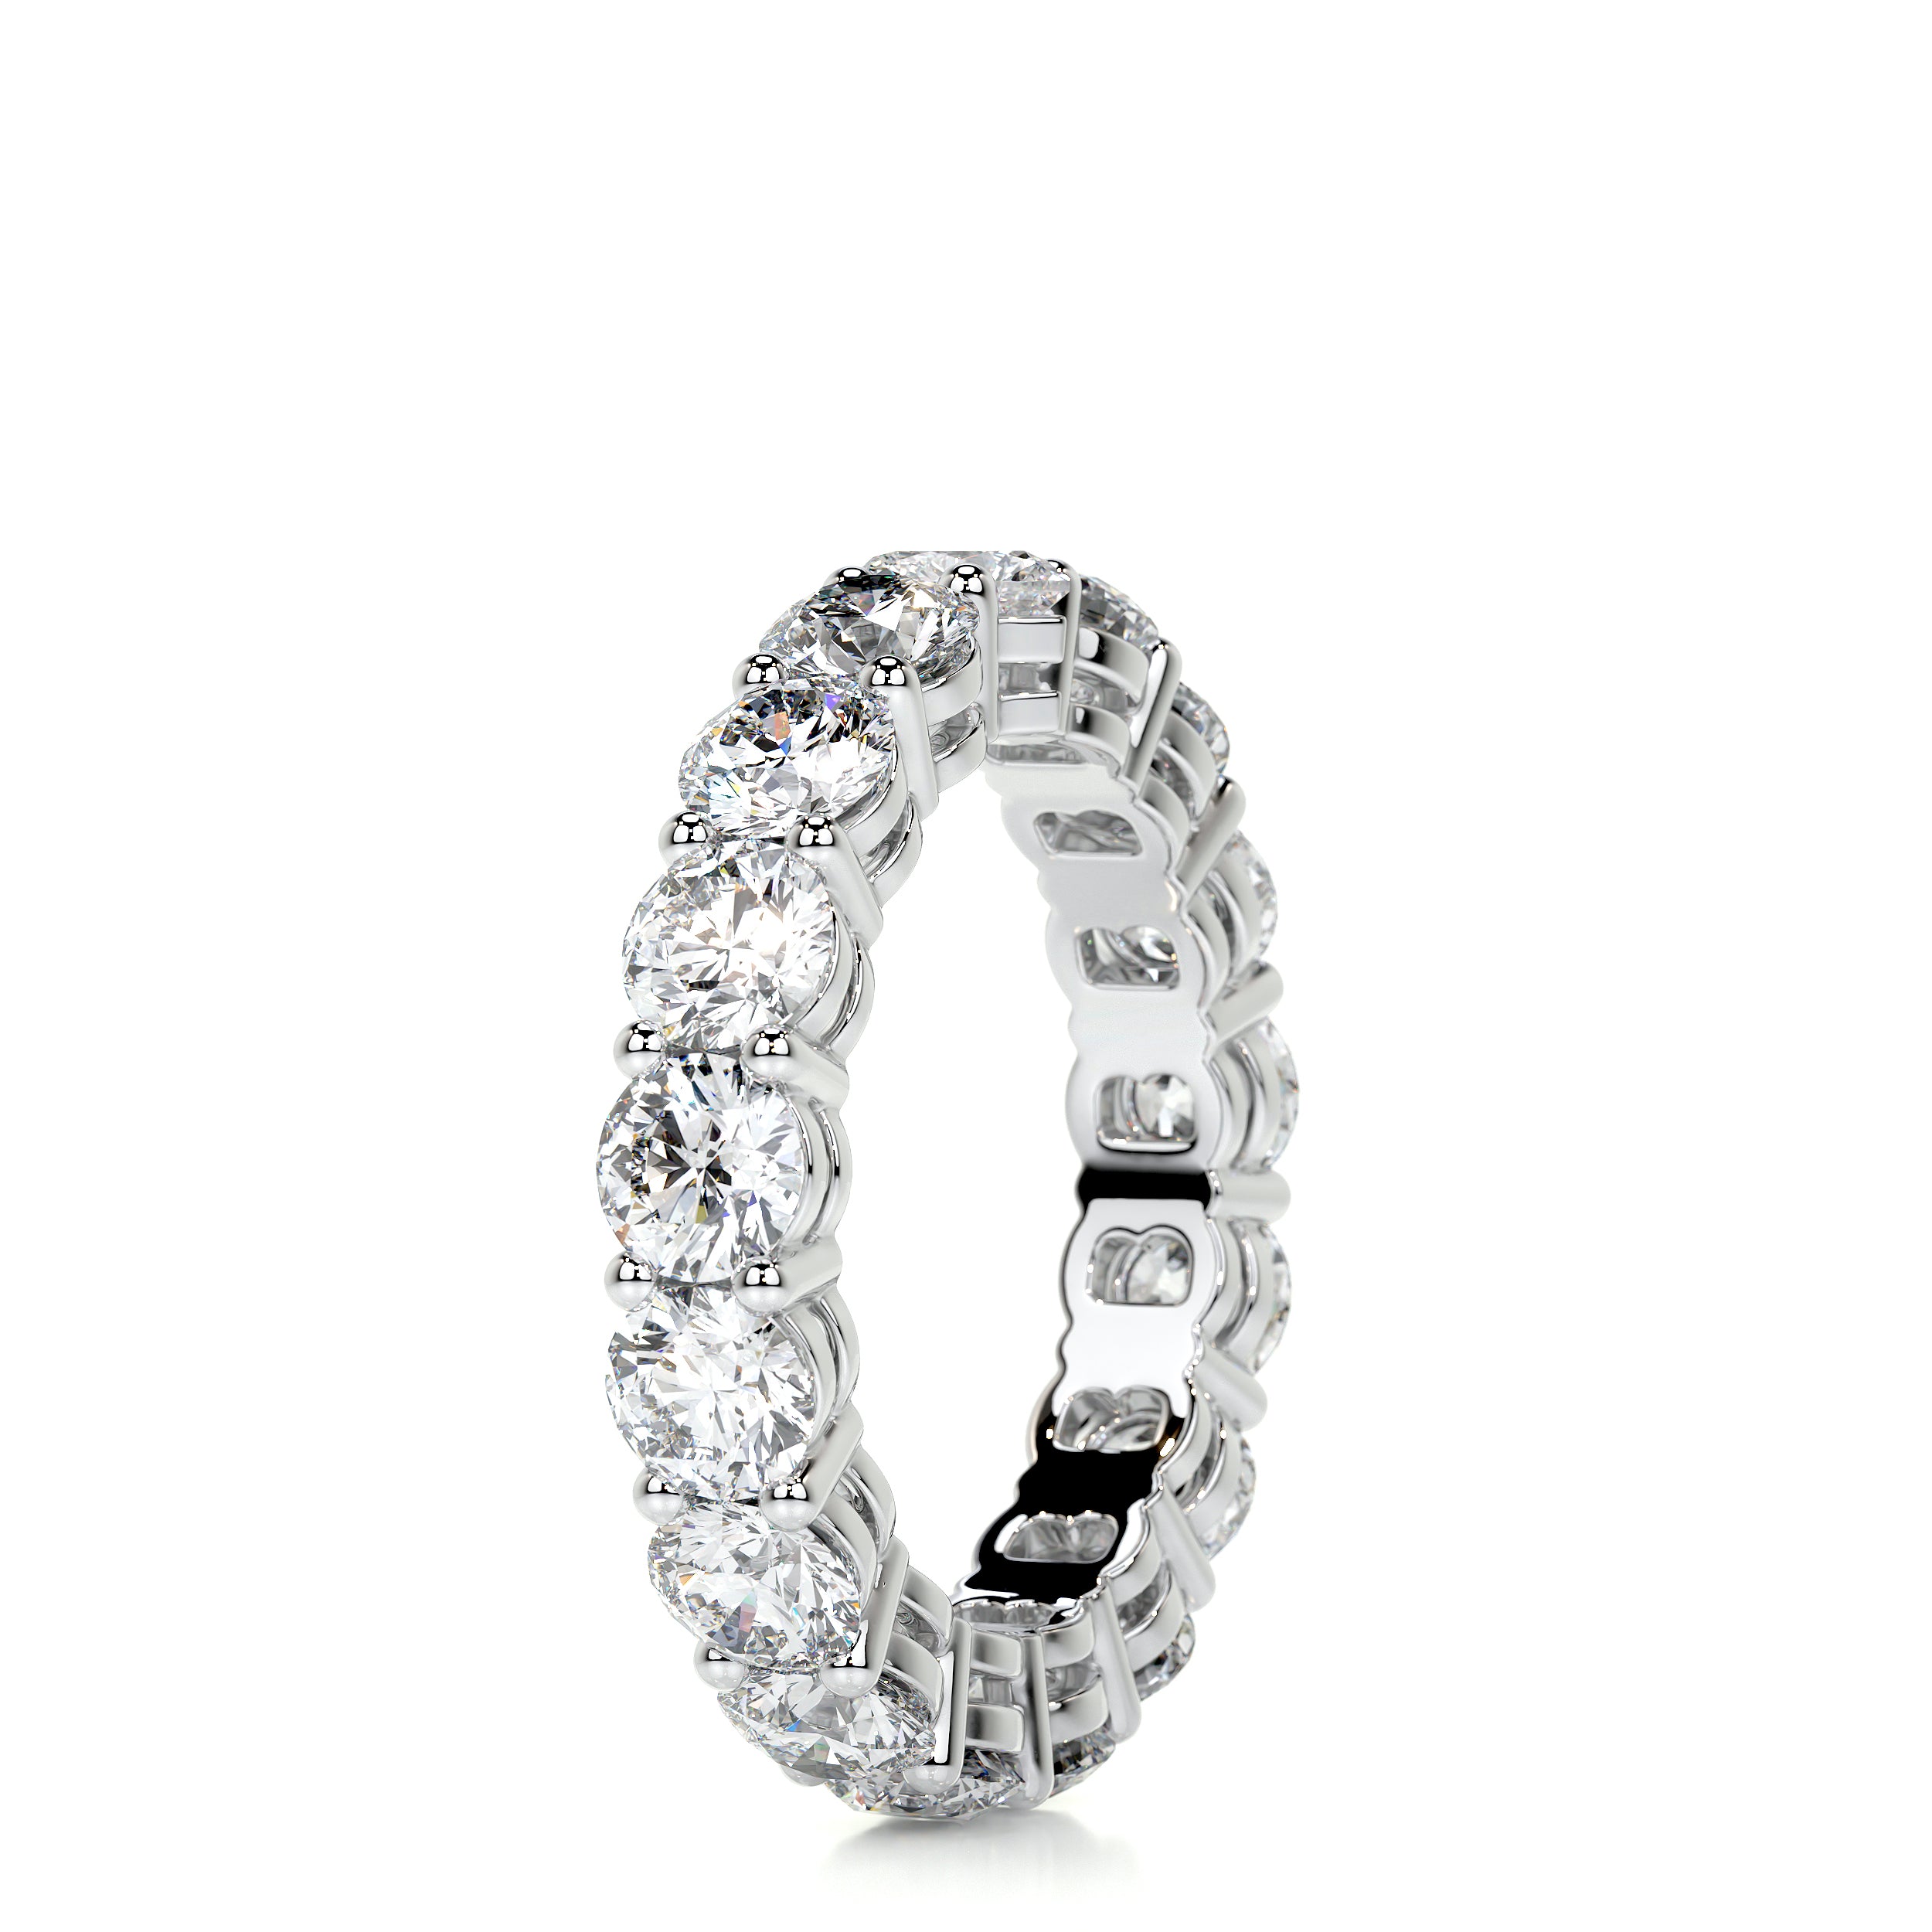 Anne Diamond Wedding Ring   (4 Carat) -14K White Gold